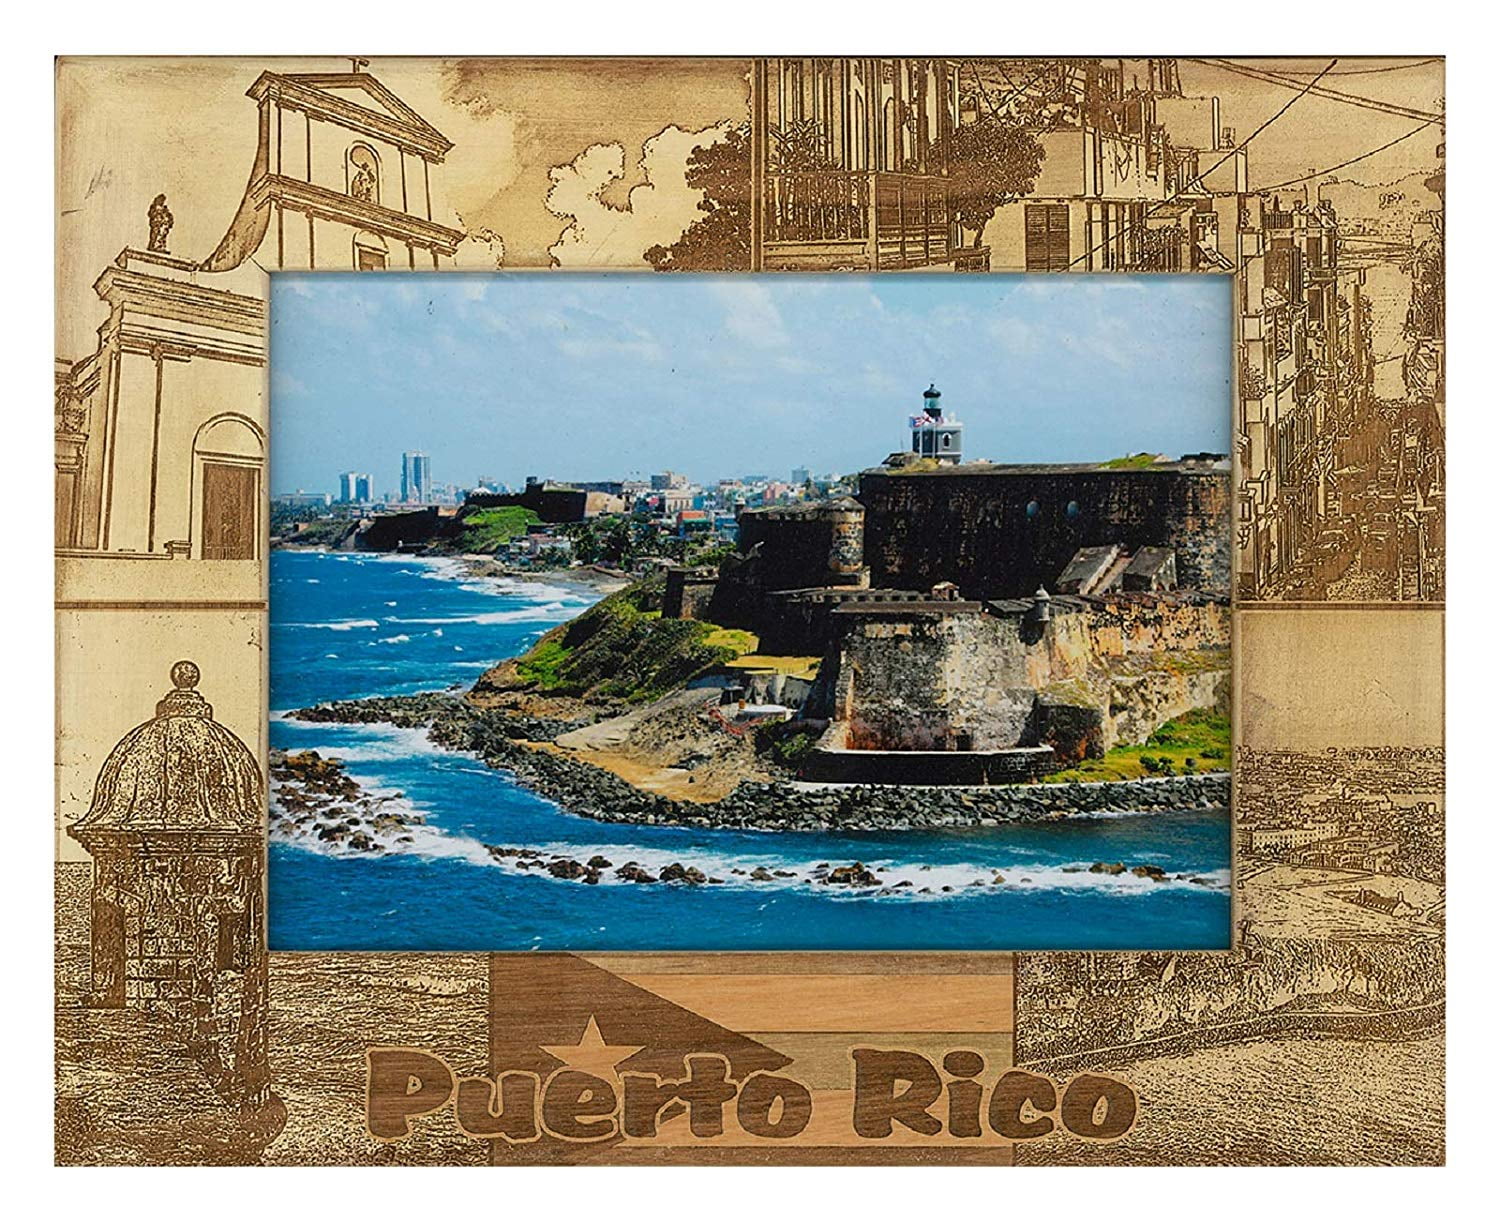 PUERTO RICO FLAG CASITAS PALMS TABLE PHOTO FRAME GIFT SOUVENIRS pictures 6x4 